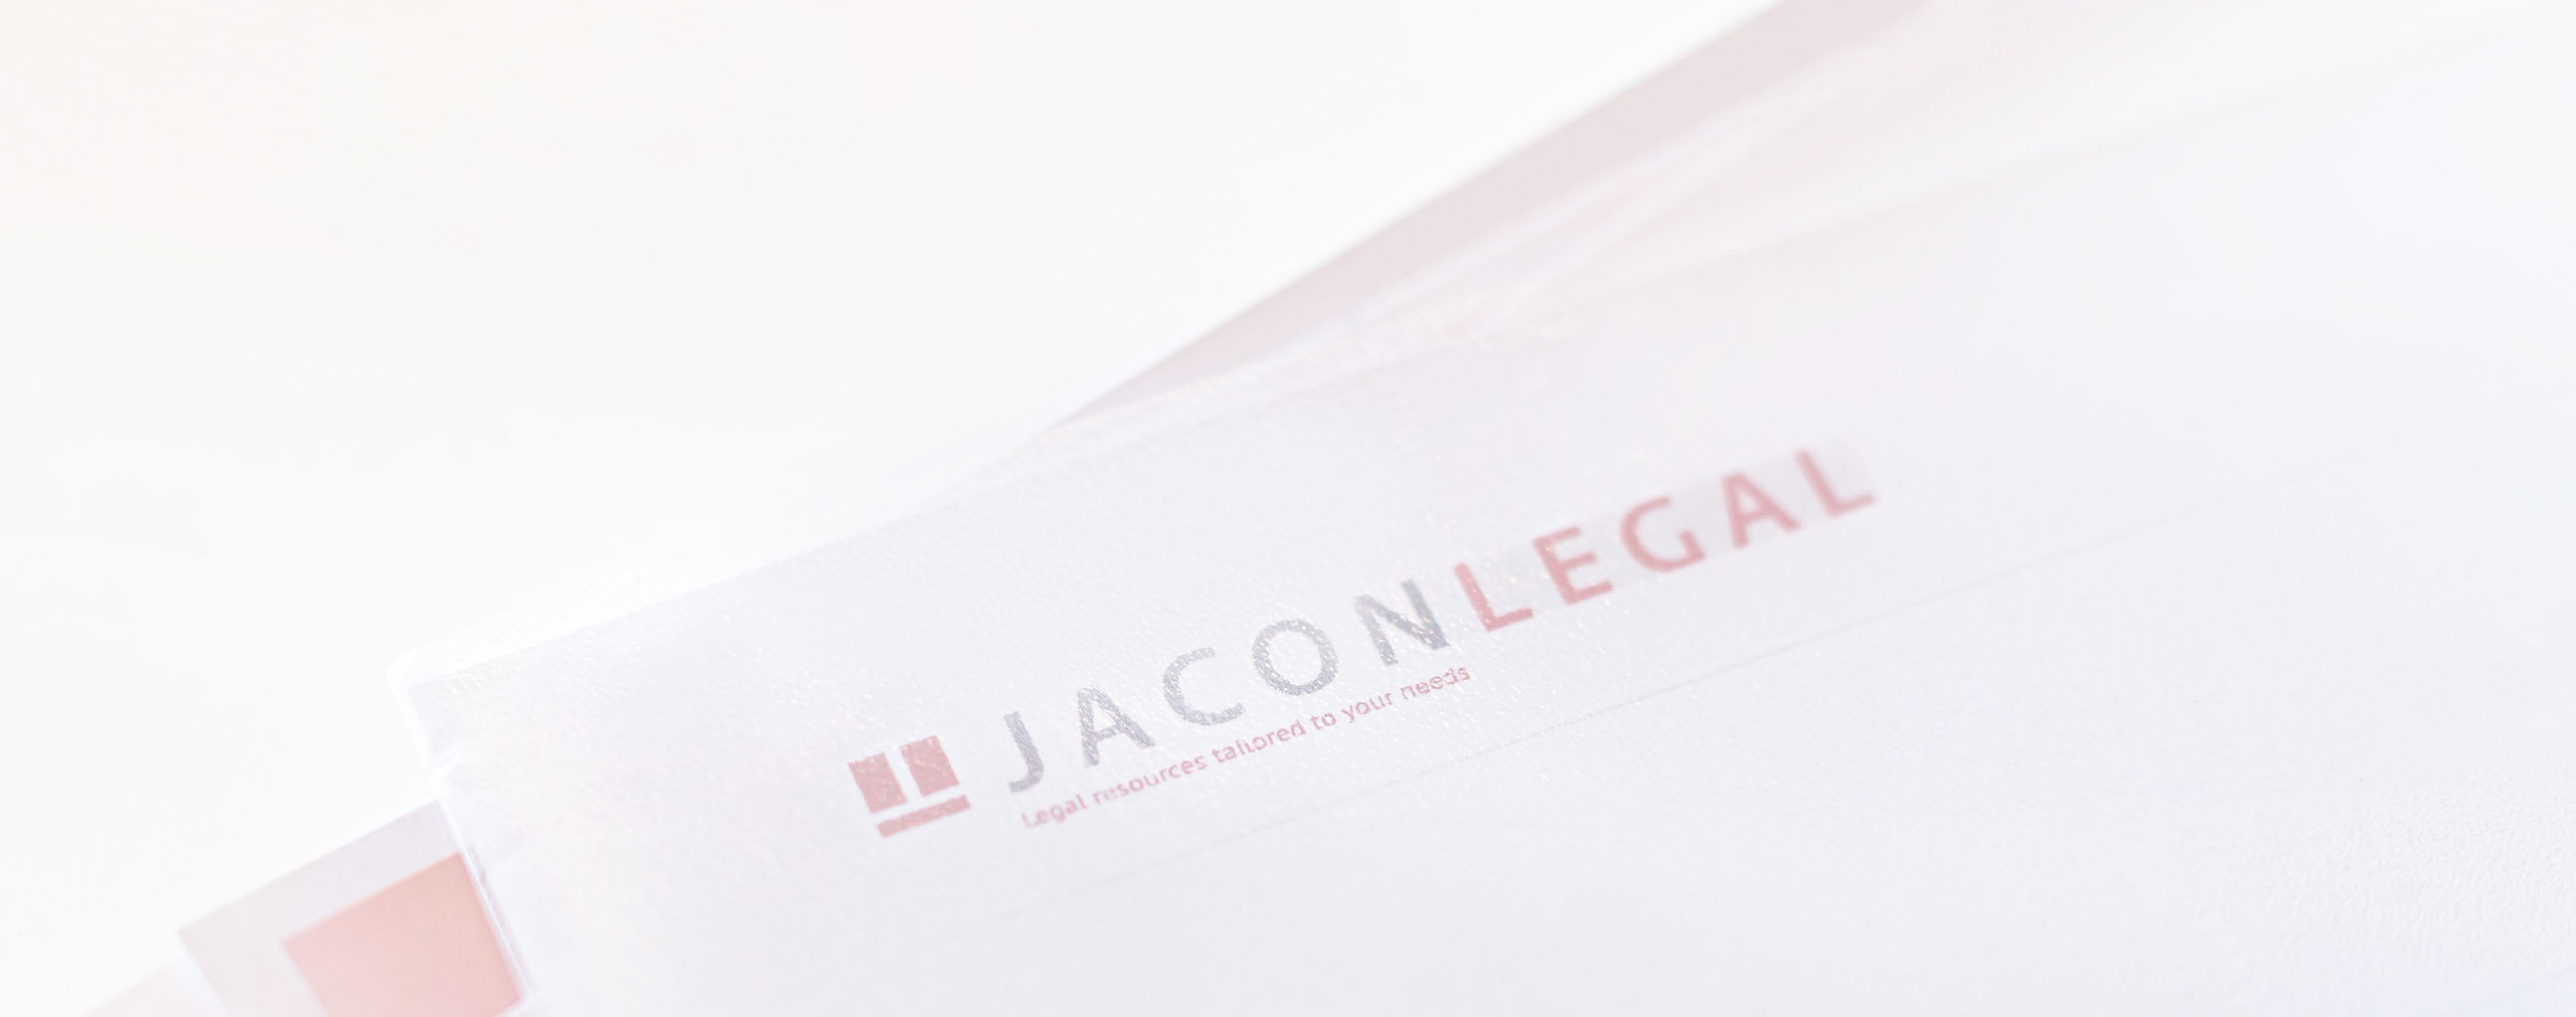 Jacon Legal Recruitment sfeerbeeld